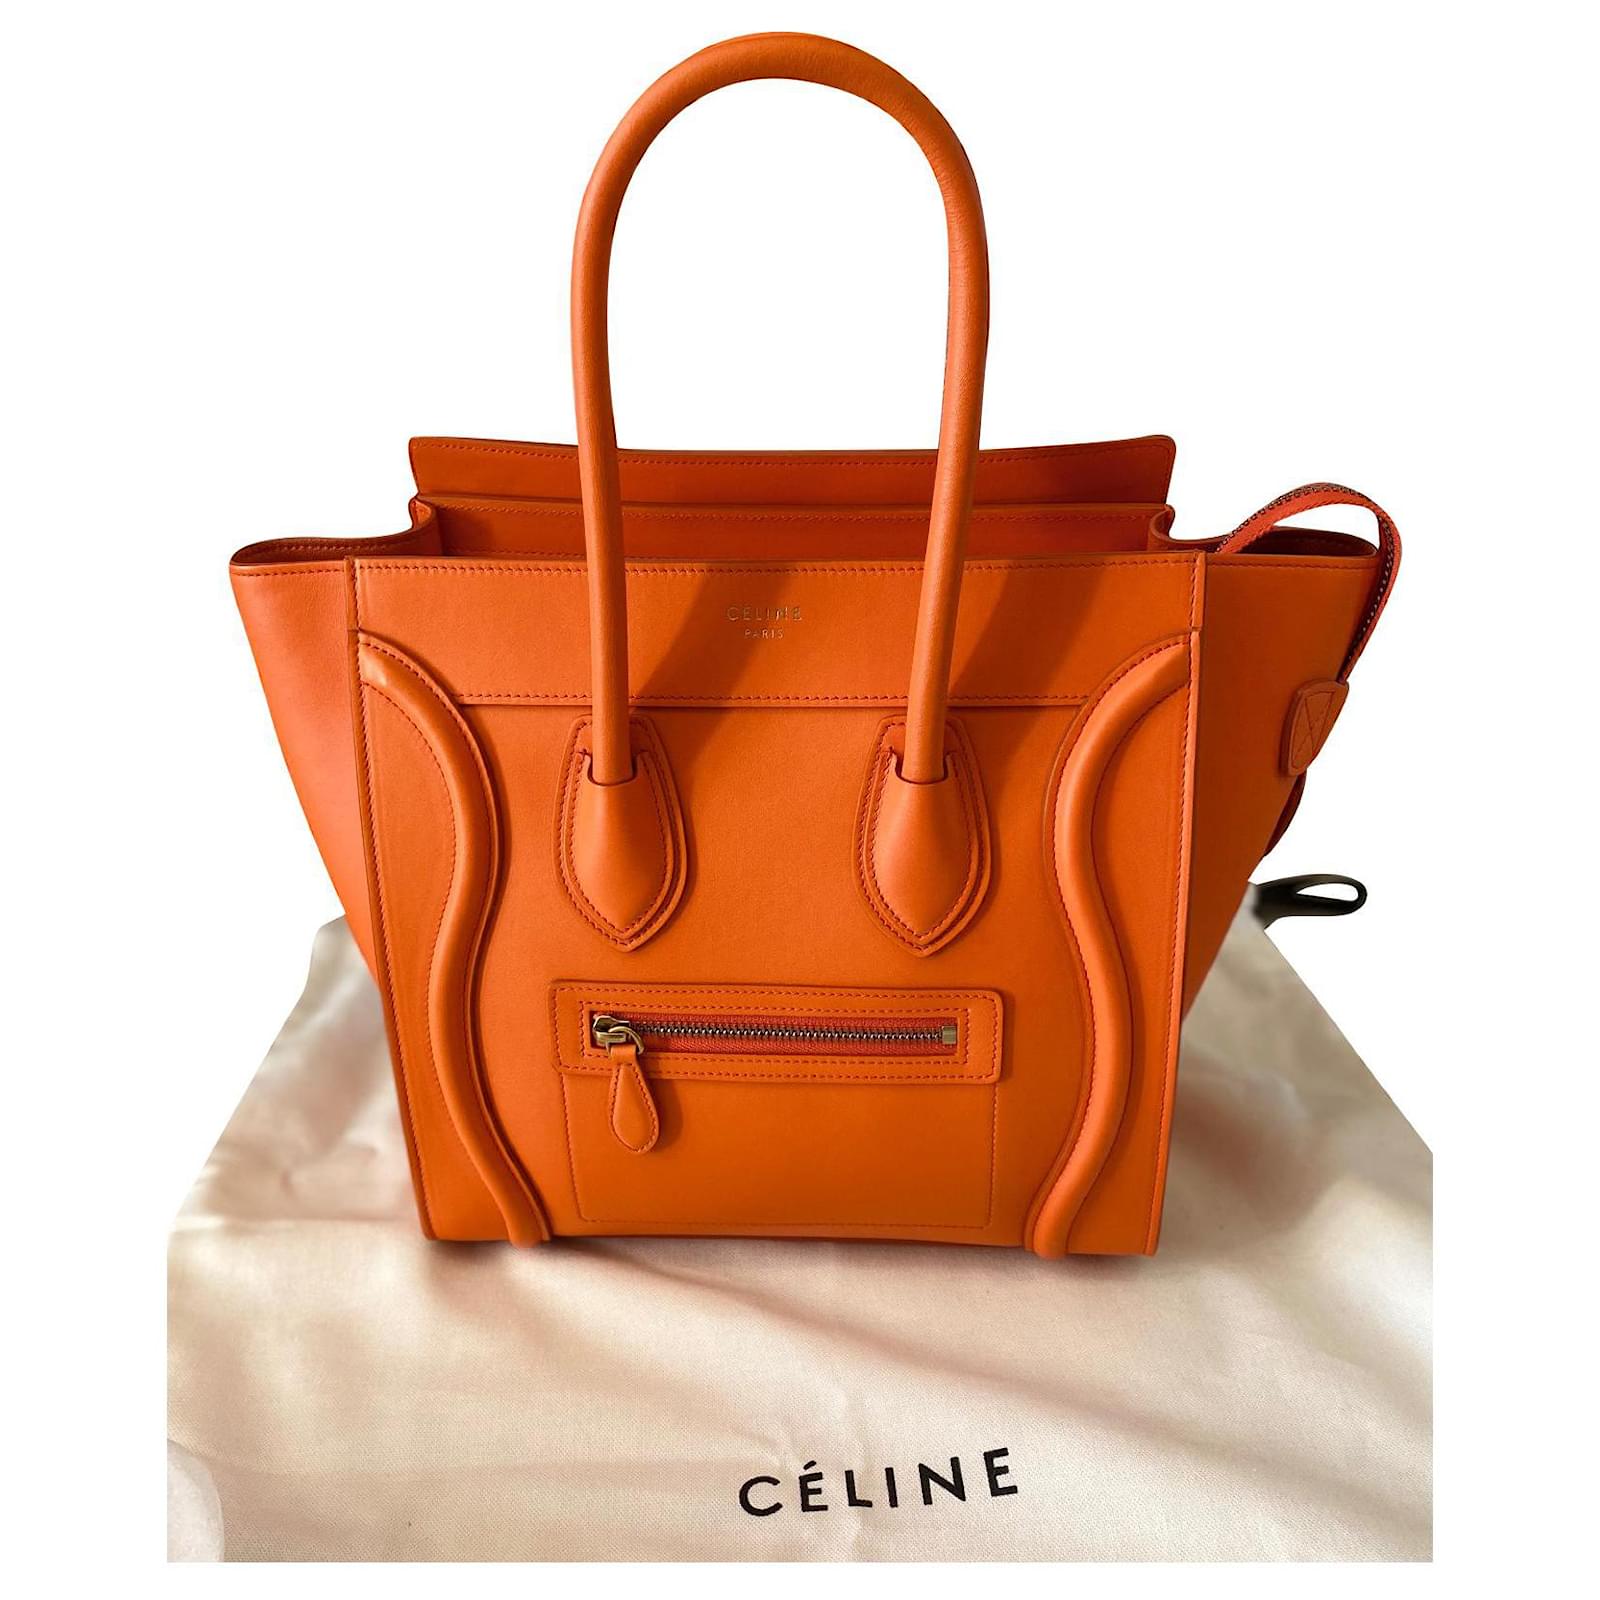 Celine One Handle Bag